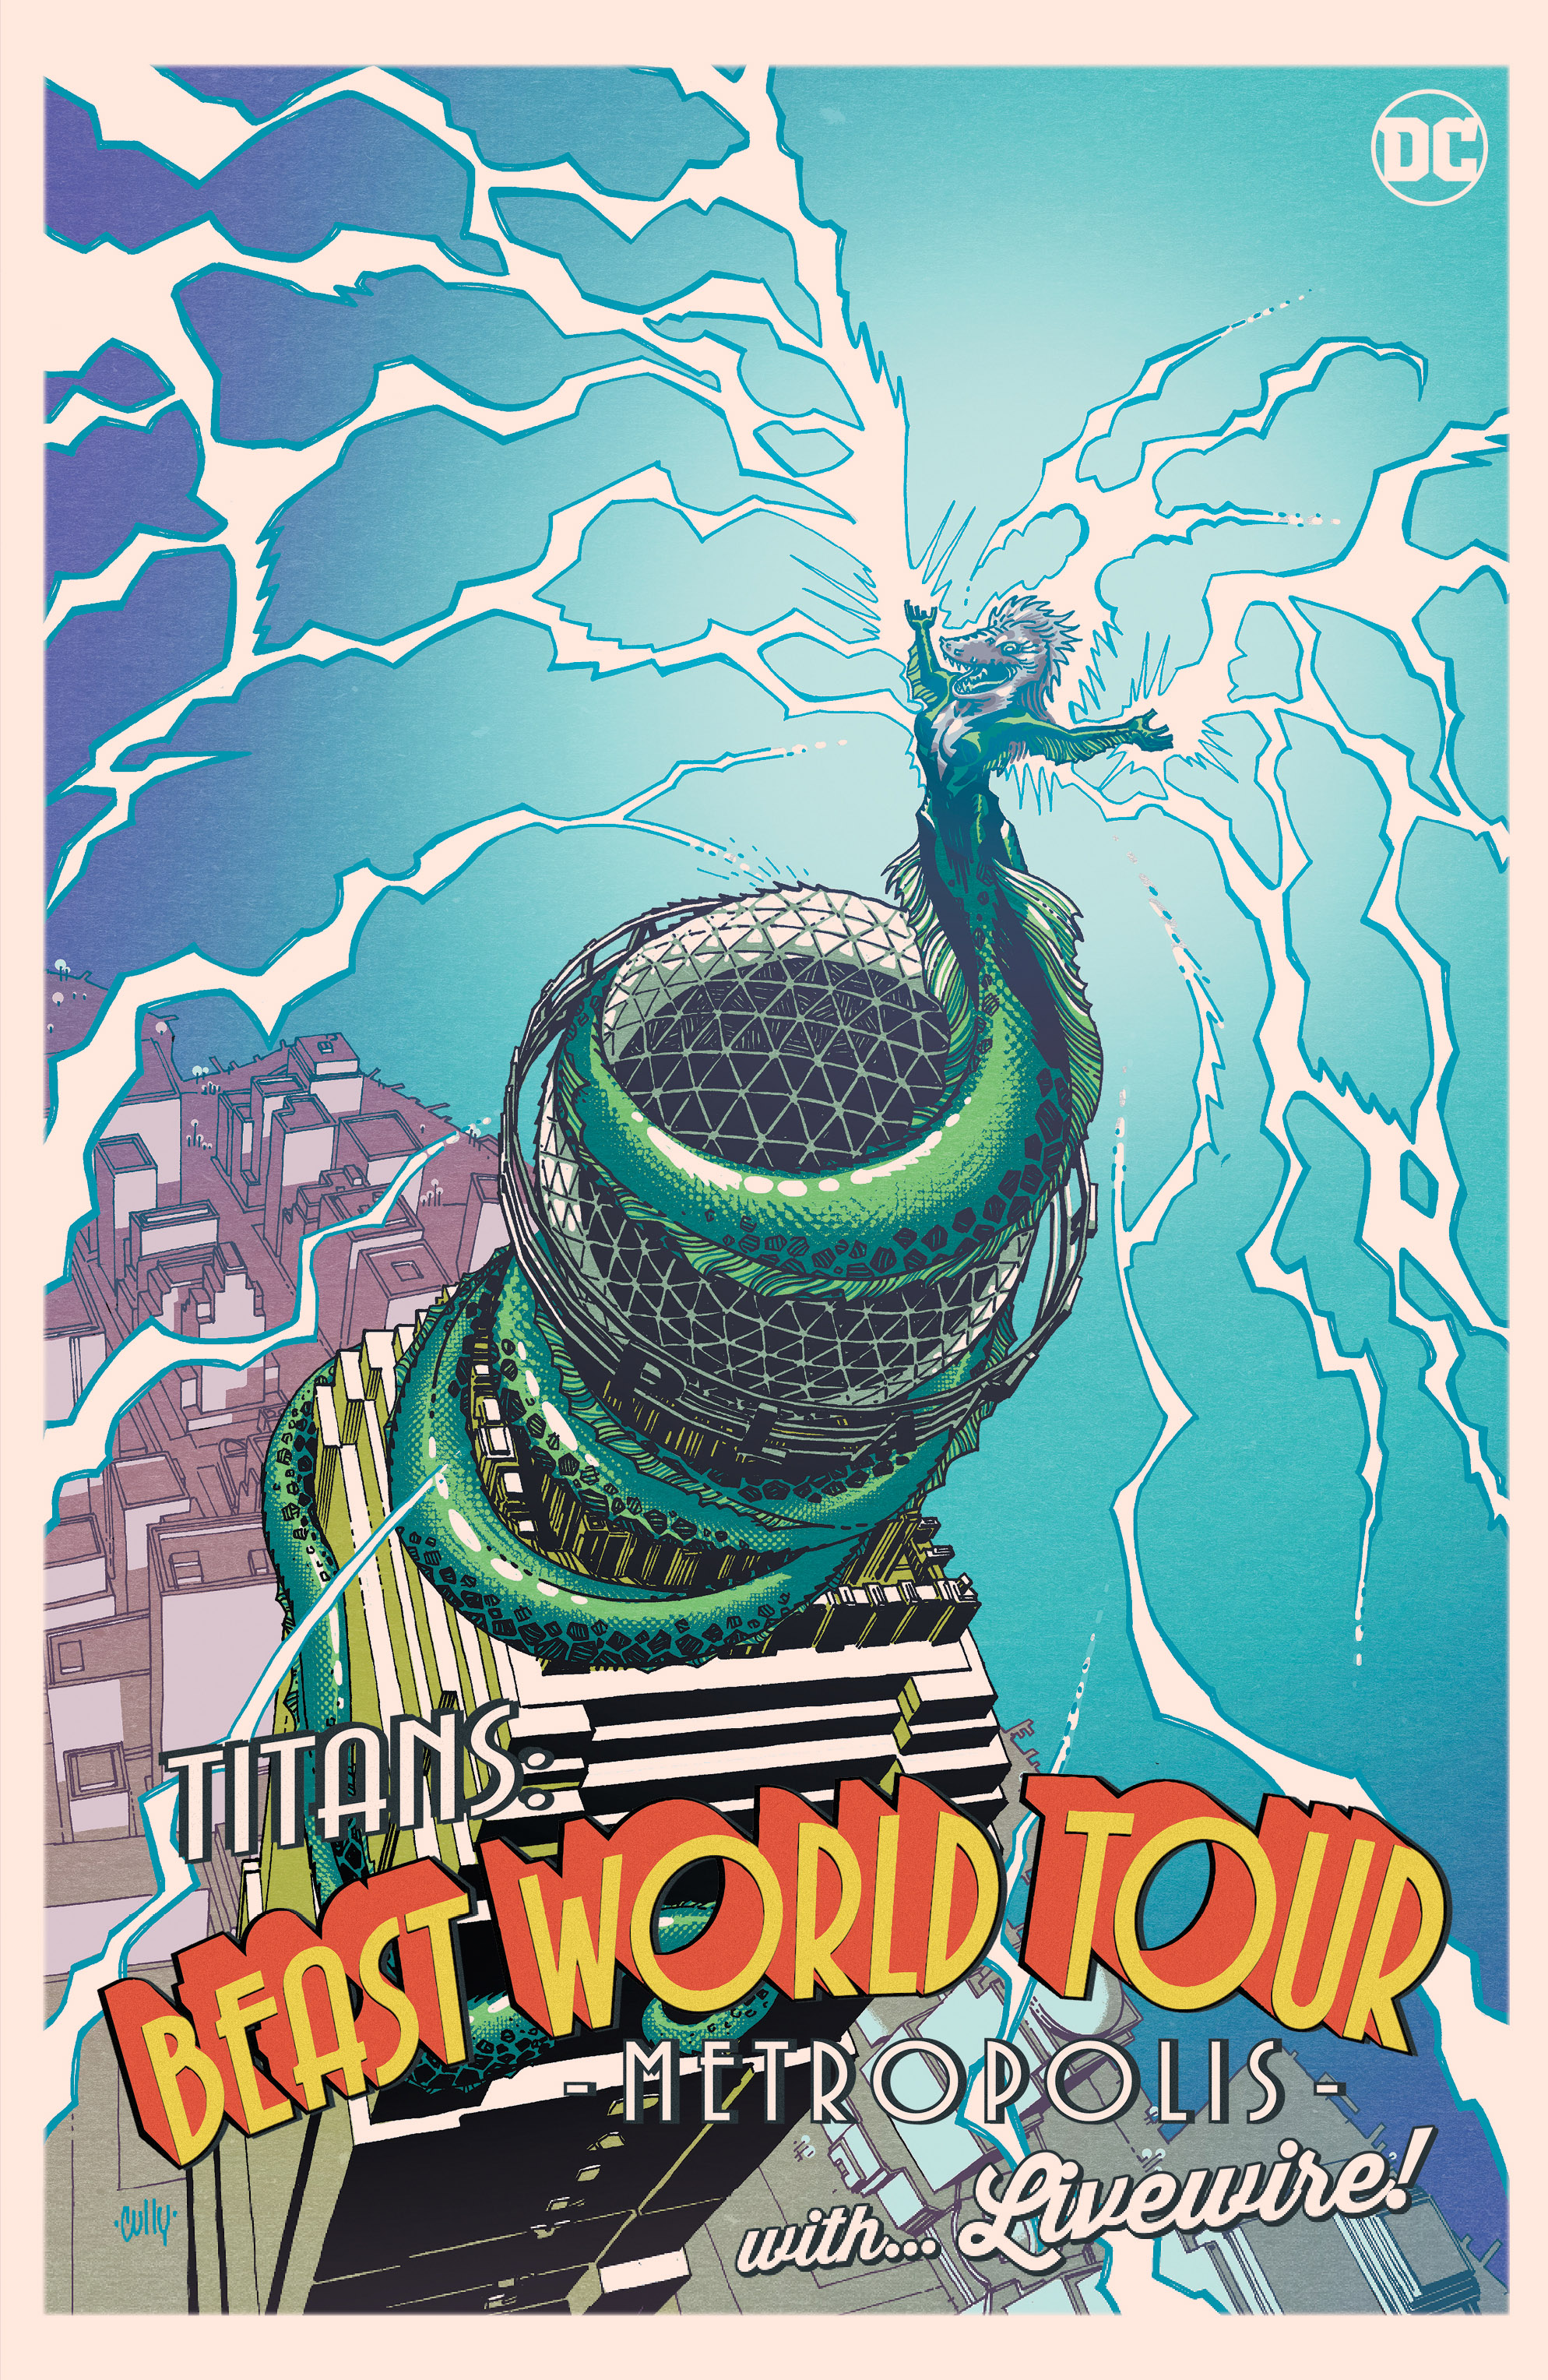 Titans Beast World Tour Metropolis #1 (One Shot) Cully Hamner Variant